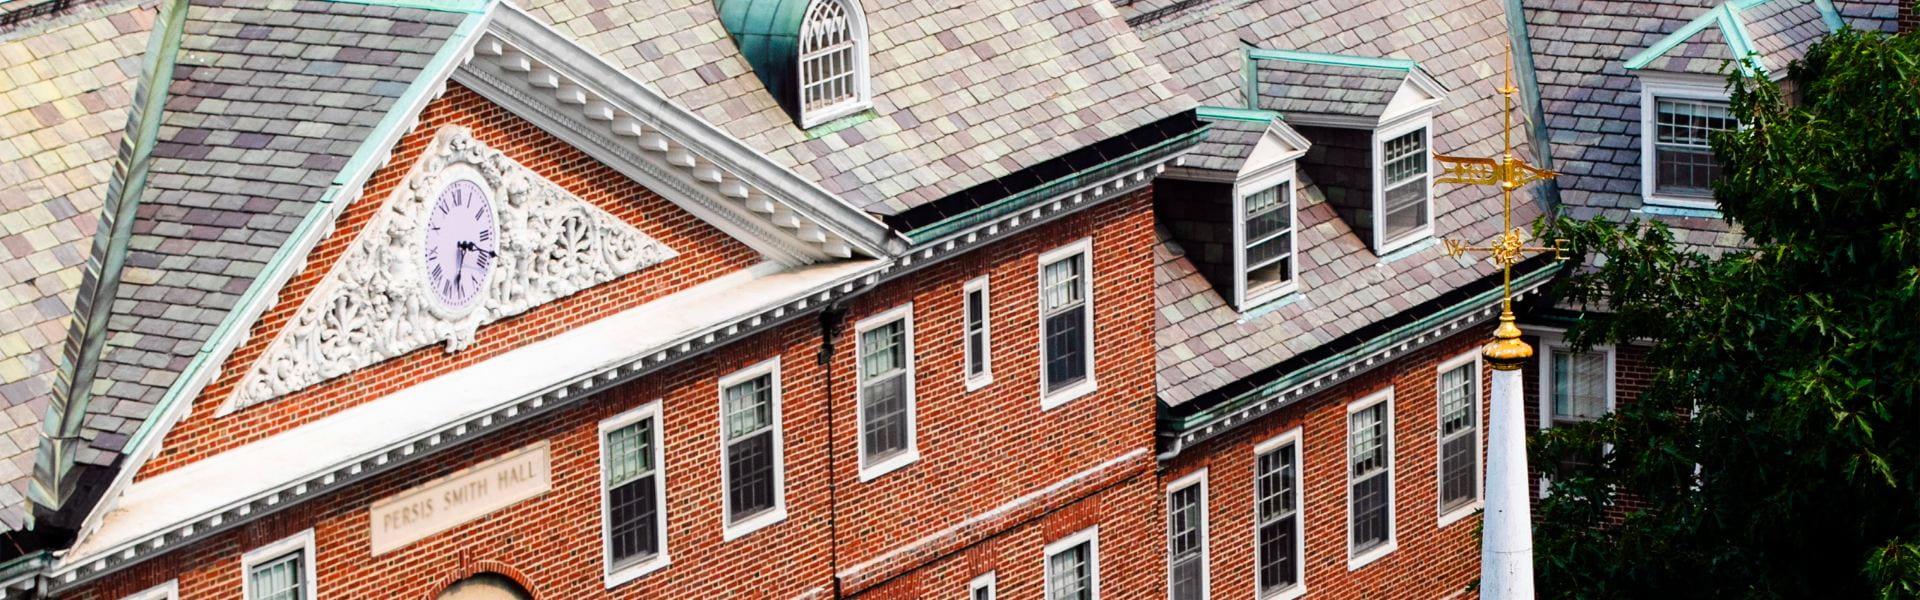 Property Information Resource Center – Harvard University Planning